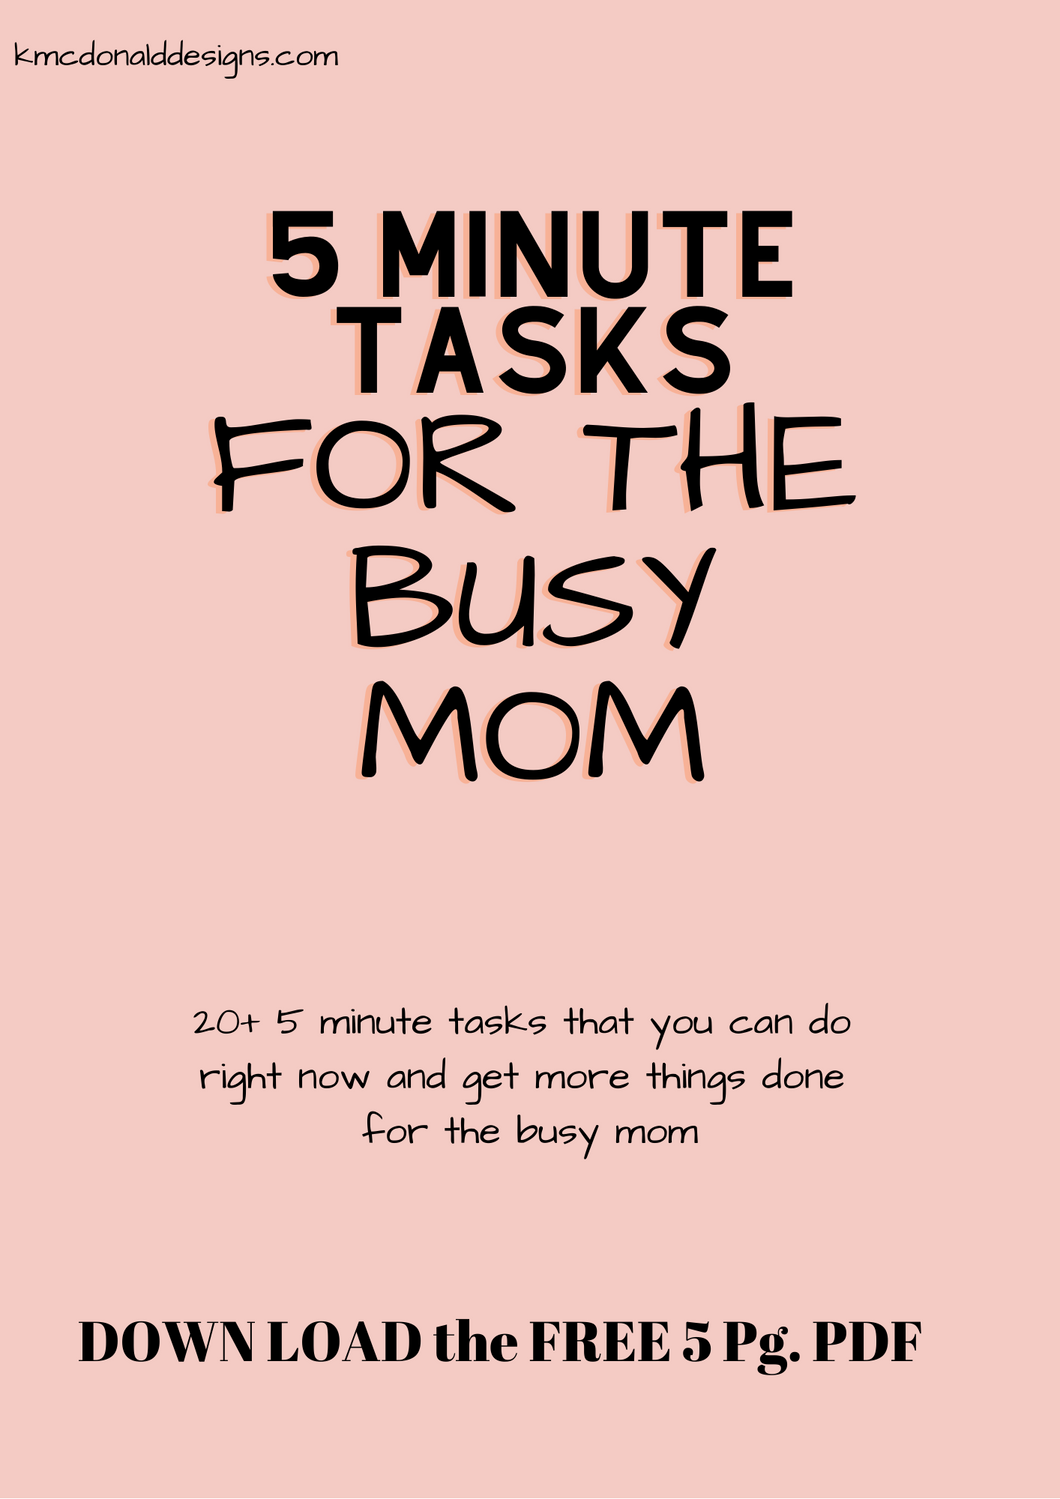 20+ 5 minute tasks for the busy mom kmcdonalddesigns.com